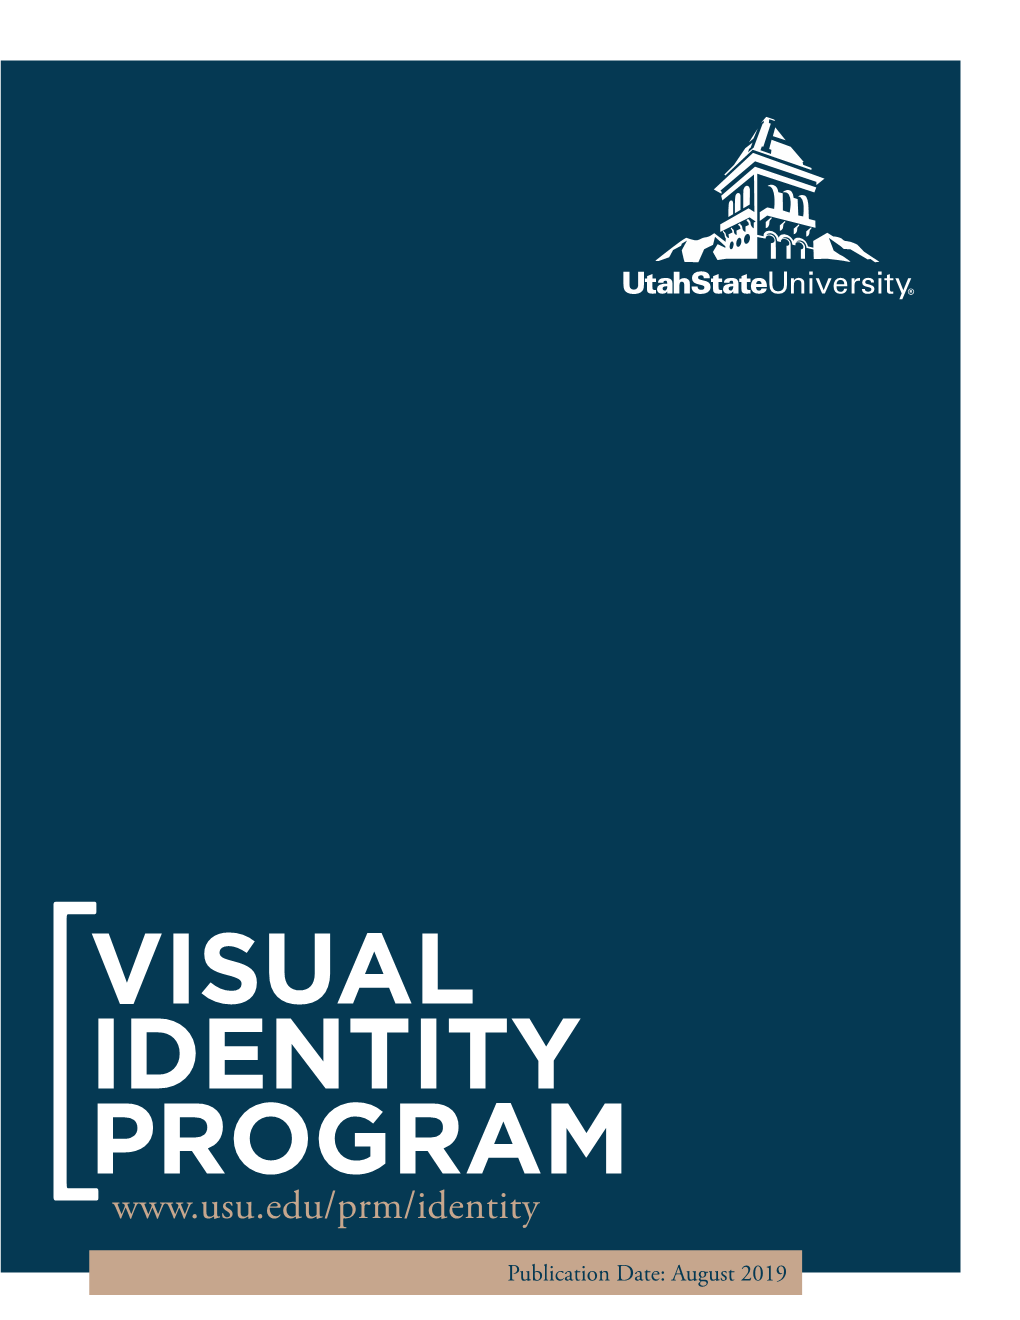 USU's Complete Visual Identity Program